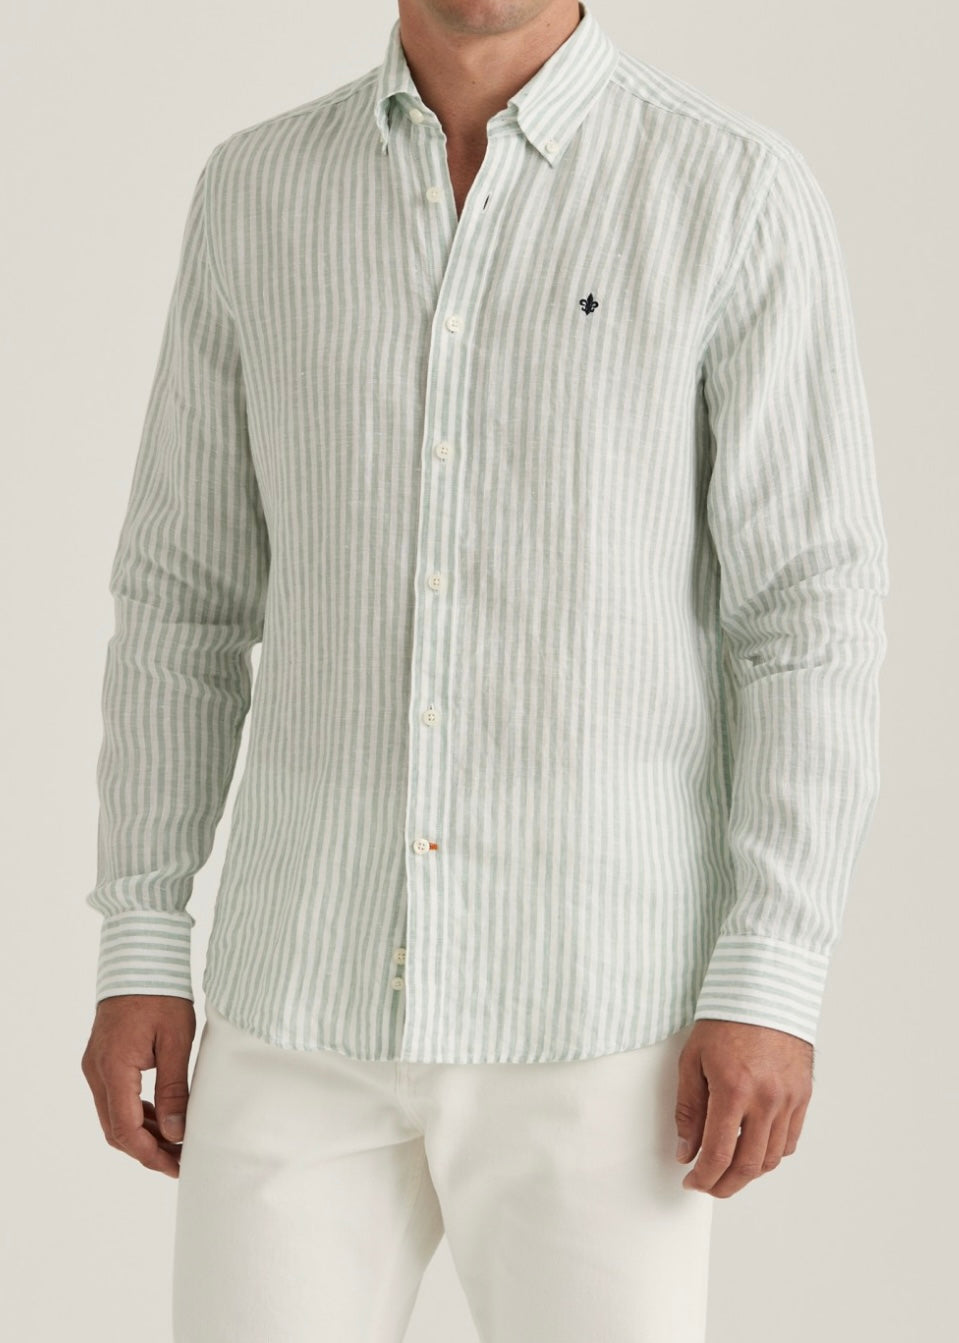 Morris Douglas Linen Stripe shirt - Green